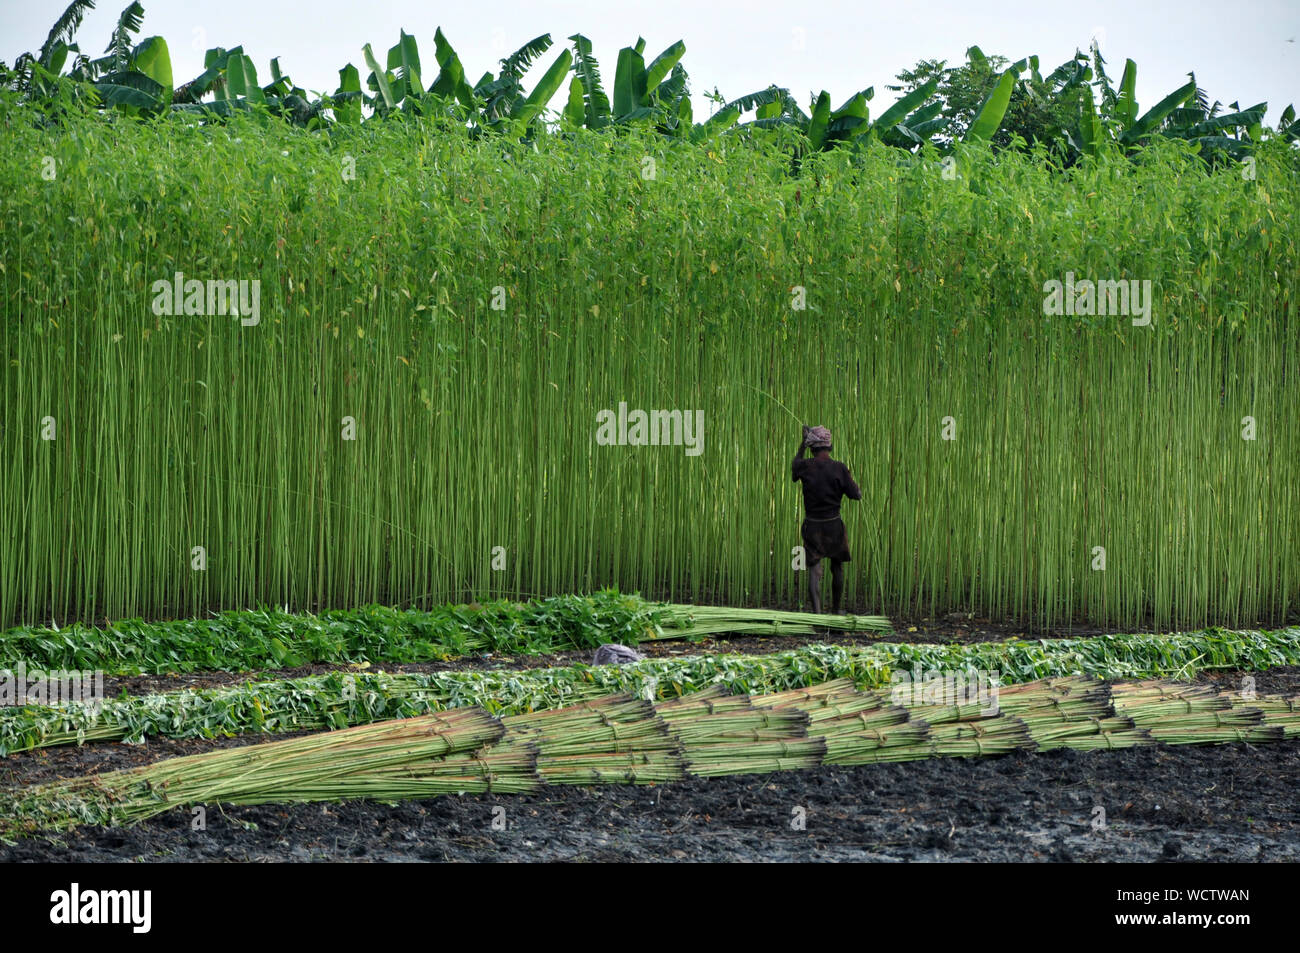 Ein Landwirt sammelt Jute Stengel aus den Feldern. Bangladesch produziert 80 Prozent der hochwertige Jute der Welt. Narail, Jessore, Bangladesch. 31. Juli 2011. Stockfoto